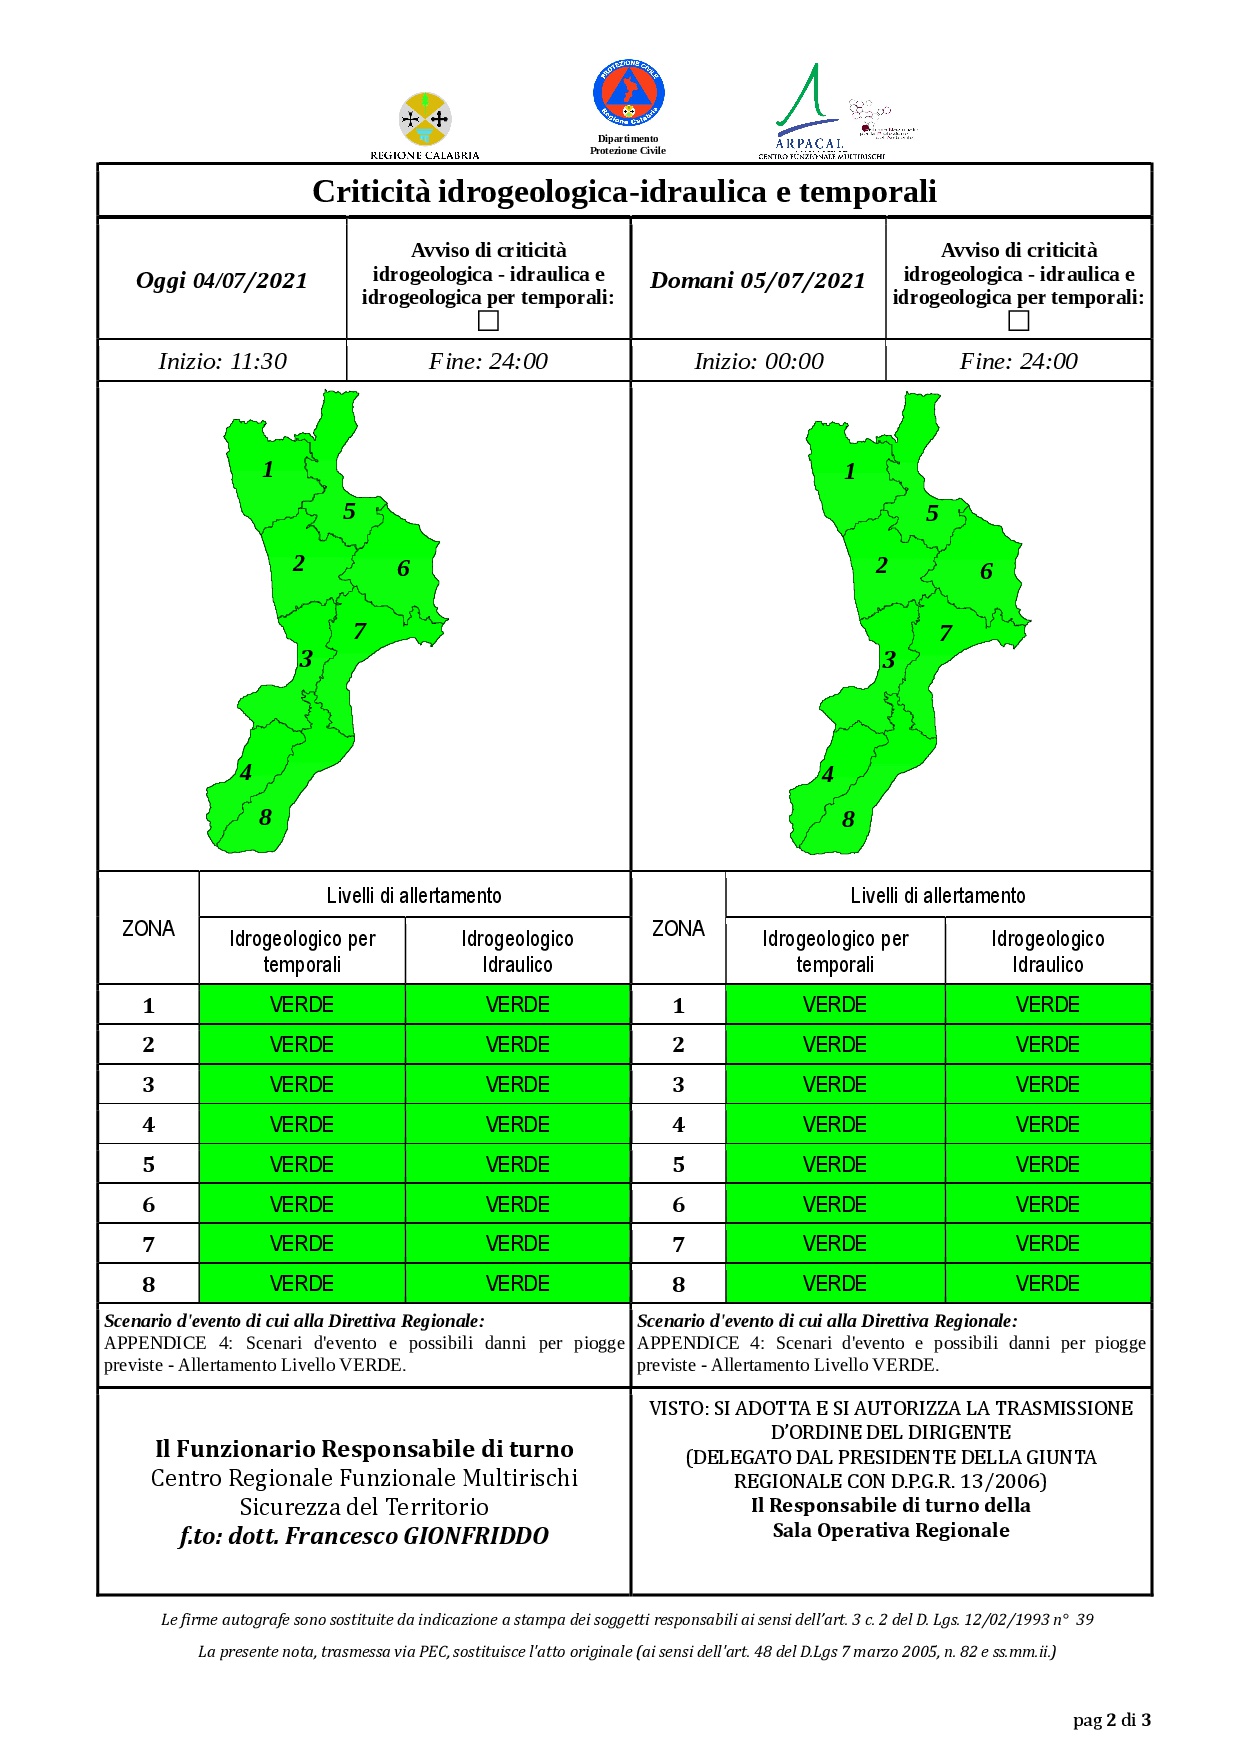 Criticità idrogeologica-idraulica e temporali in Calabria 04-07-2021